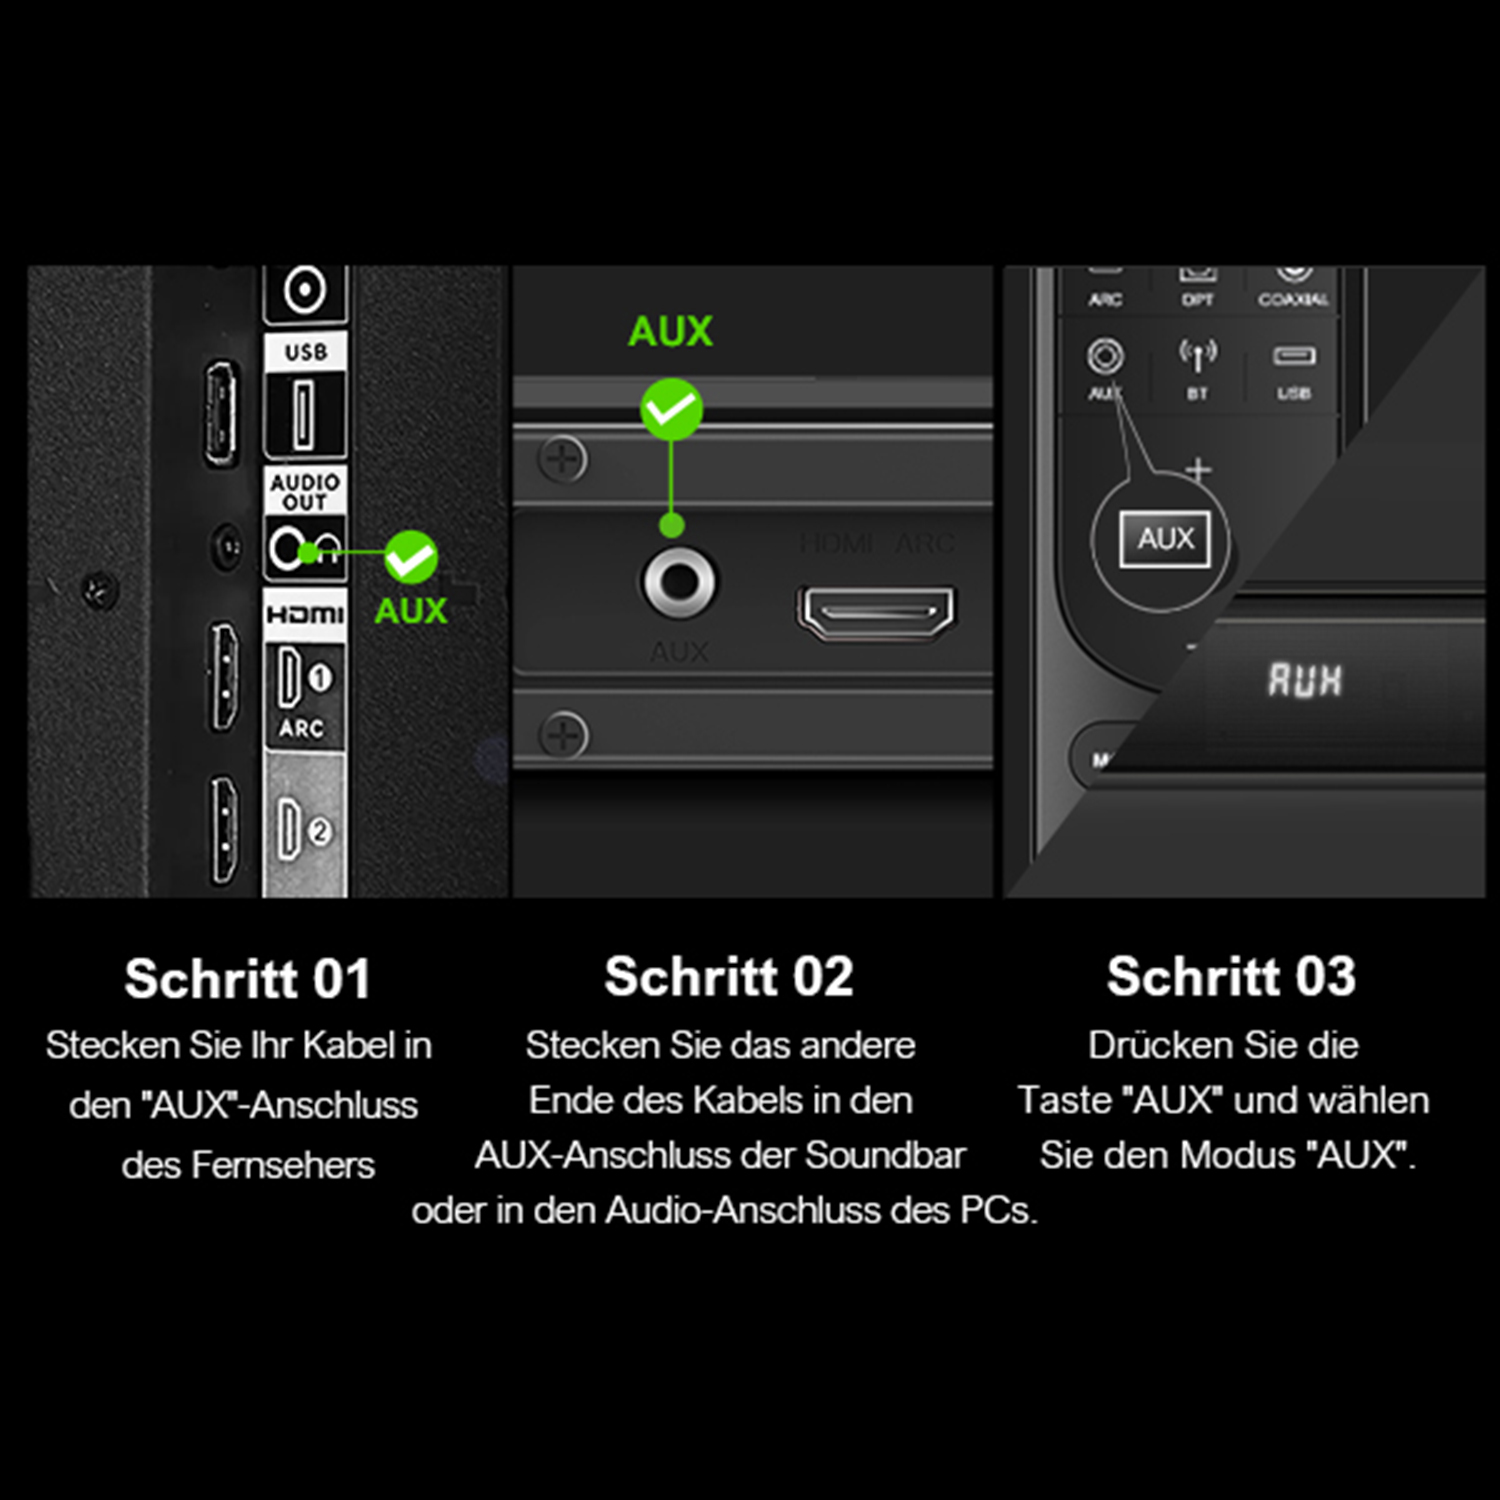 ULTIMEA Nova S40 Verbessert Soundbar mit 2.1 Lautsprecher, - Subwoofer, Bass Soundbar TV schwarz mit PC Subwoofer, Surround